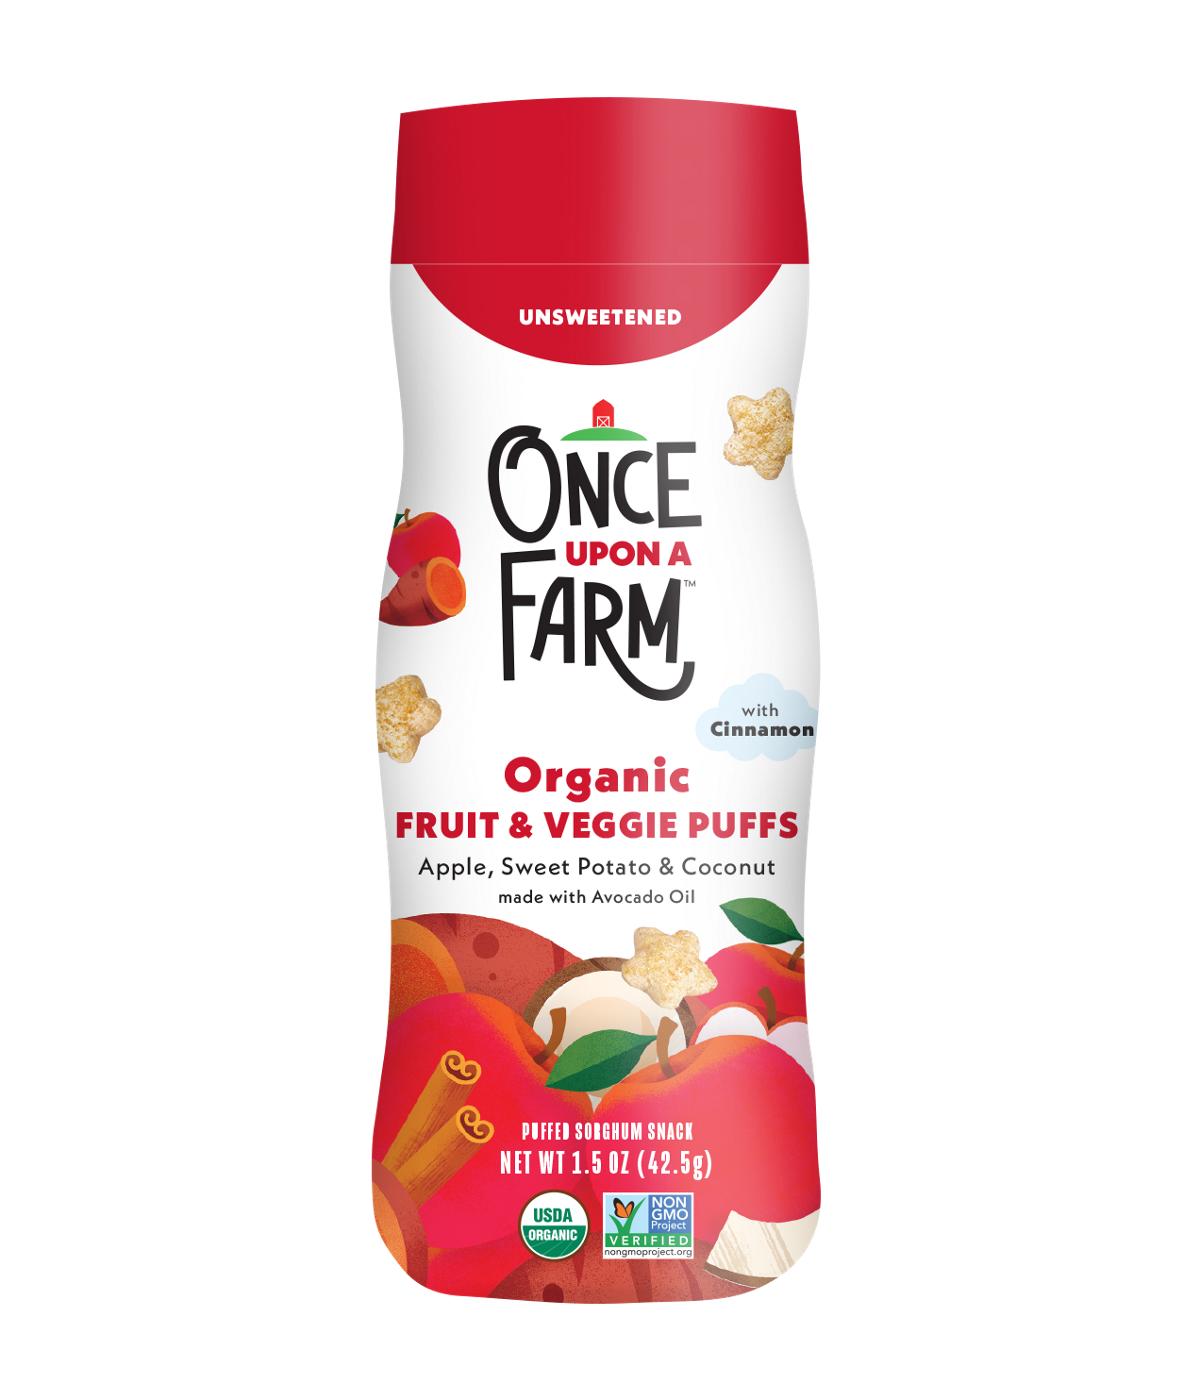 Once Upon a Farm Organic Fruit & Veggie Puffs - Apple, Sweet Potato & Coconut; image 1 of 3